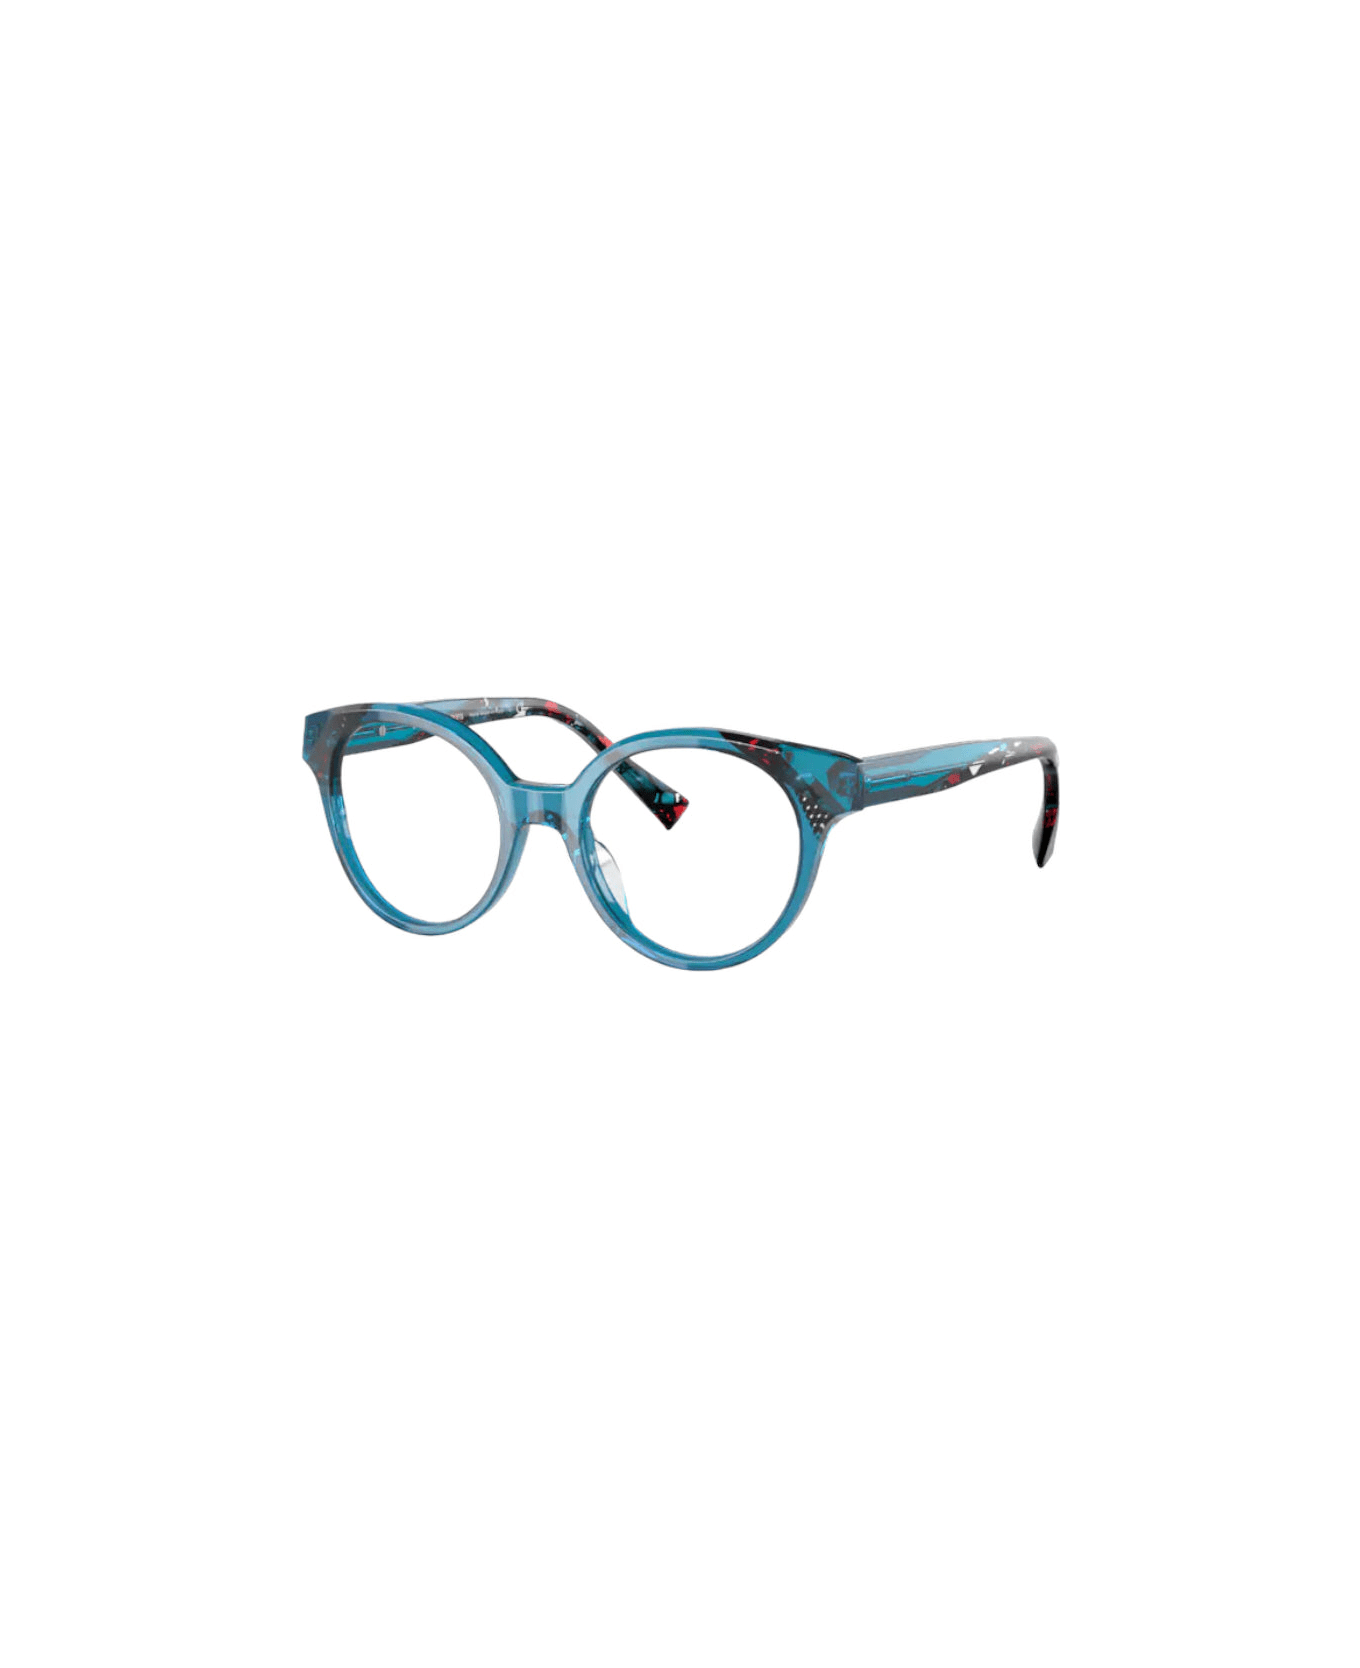 Alain Mikli Sevoie - 3143 - Red / Blu Glasses